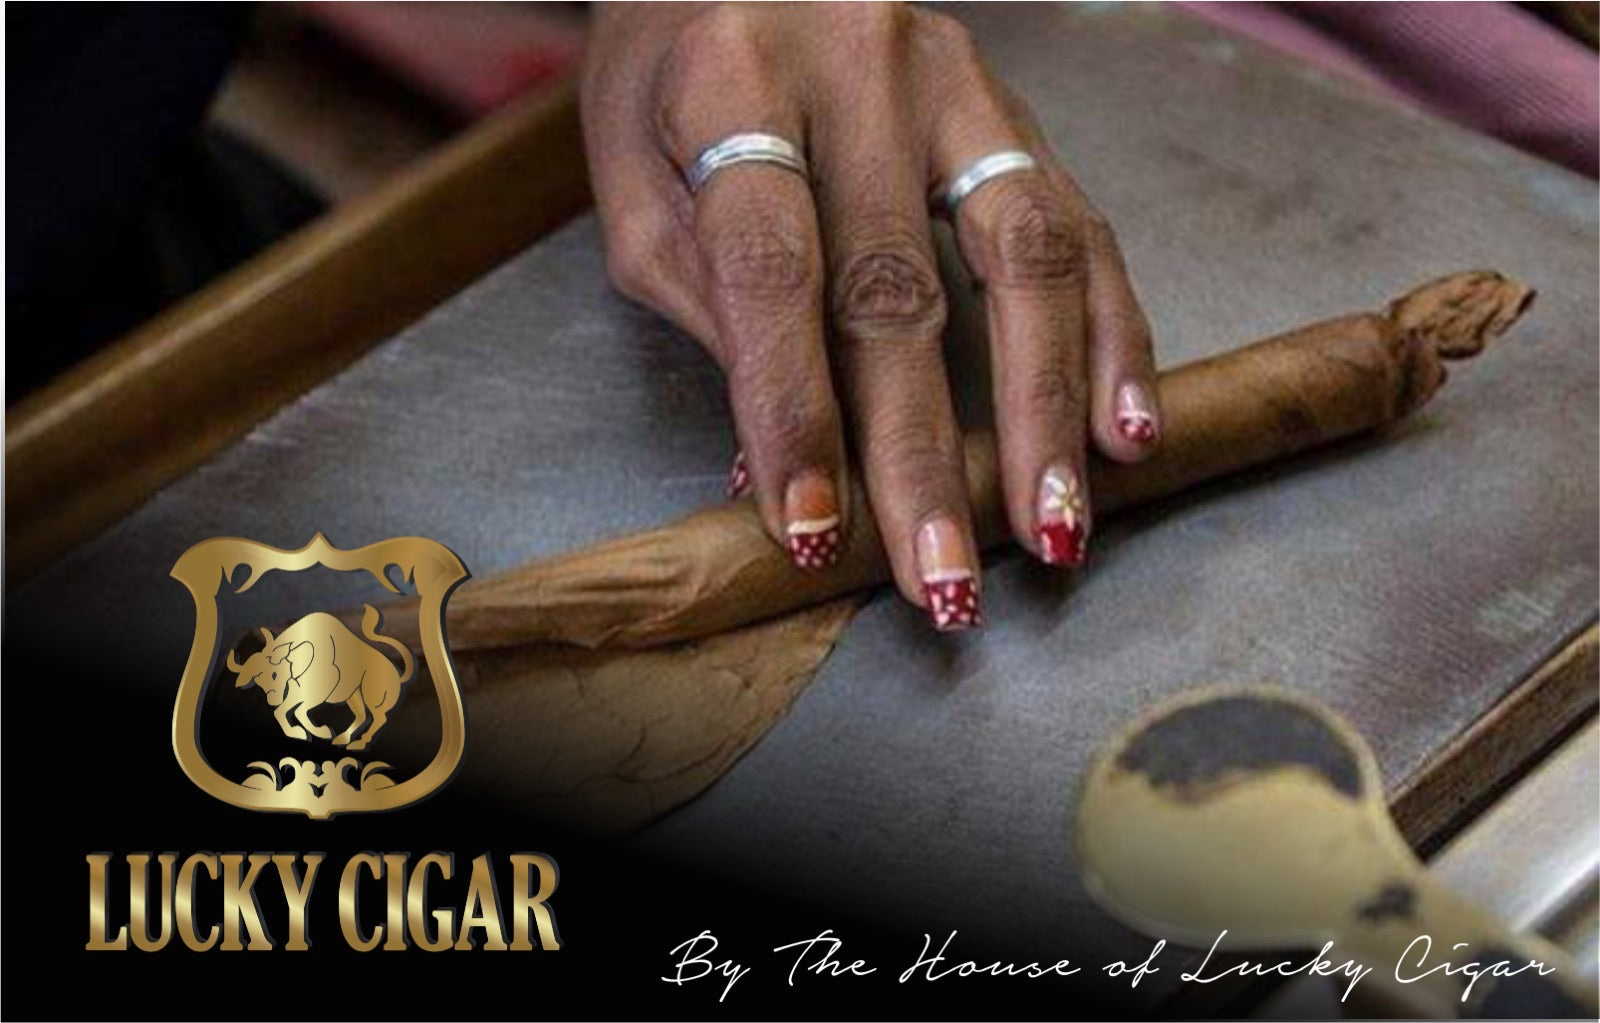 Habano Cigars: Habano Esteli CUBAN LANCERO 7 1/4X38 BOX OF 20